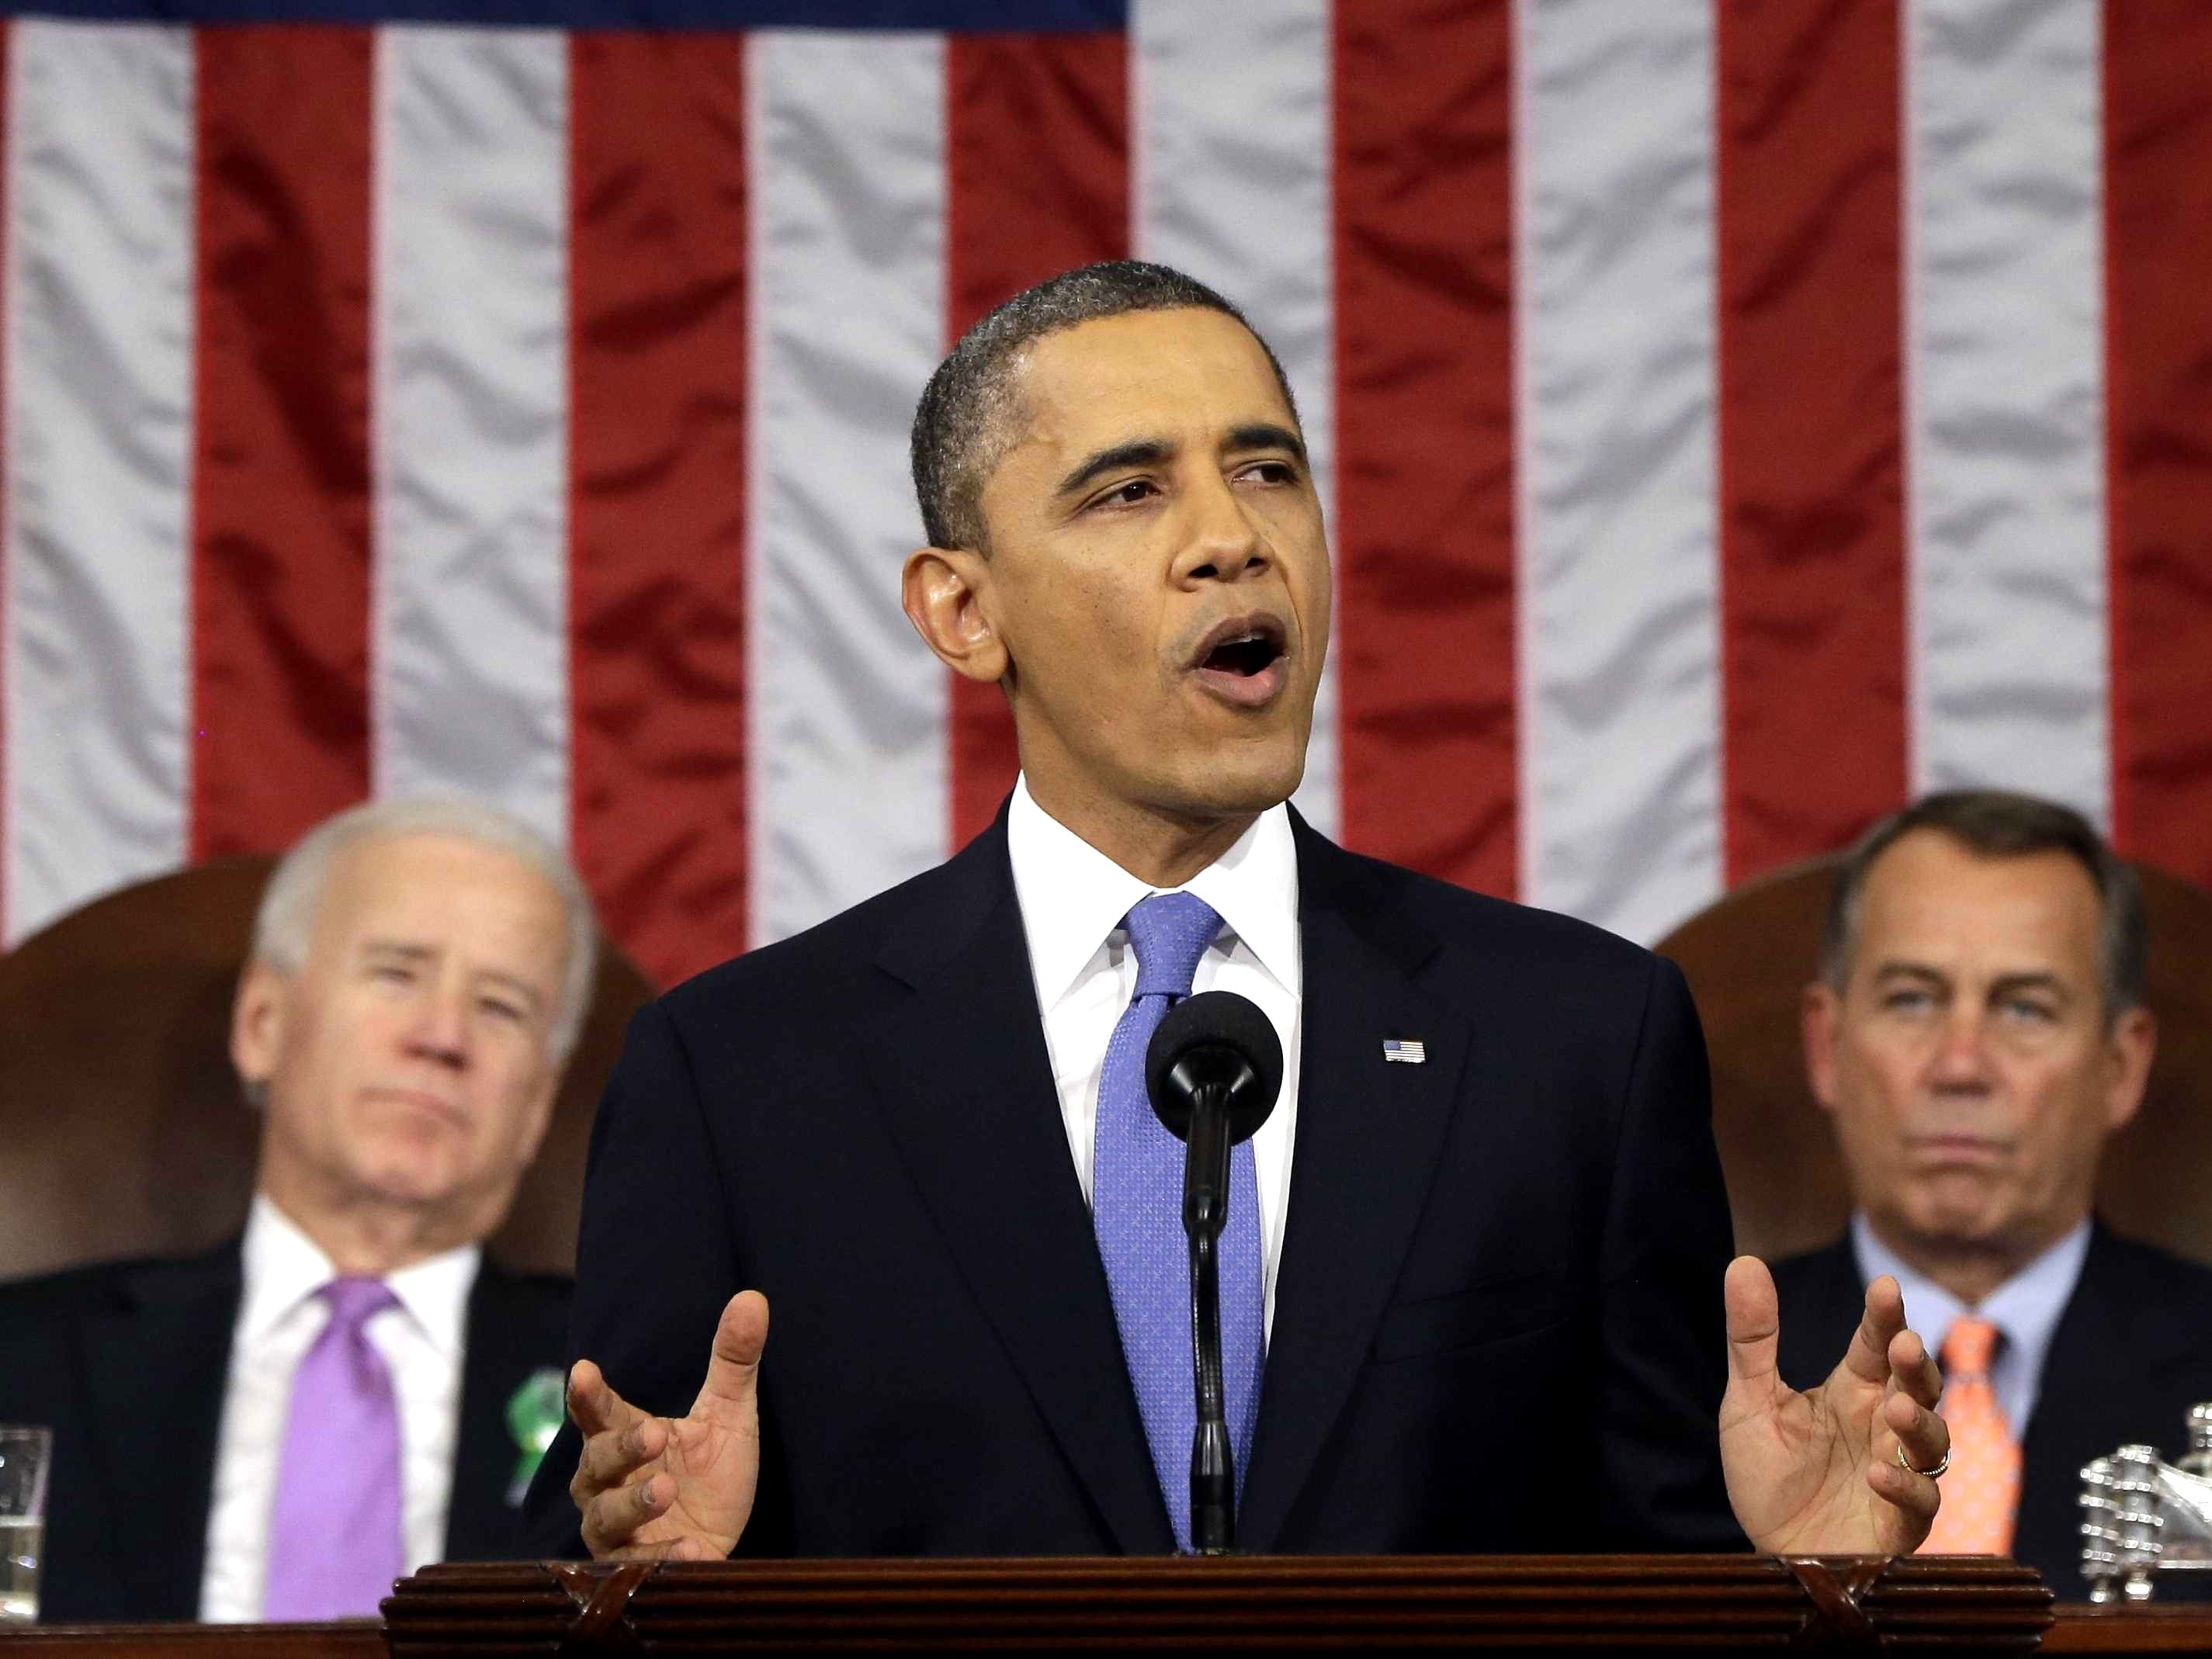 President Barack Obama State of the Union Address 12 Feb. 2013 image from http://static4.businessinsider.com/image/511af9ec69bedd5071000028-2850-2138-400-/barack-obama-state-of-the-union.jpg